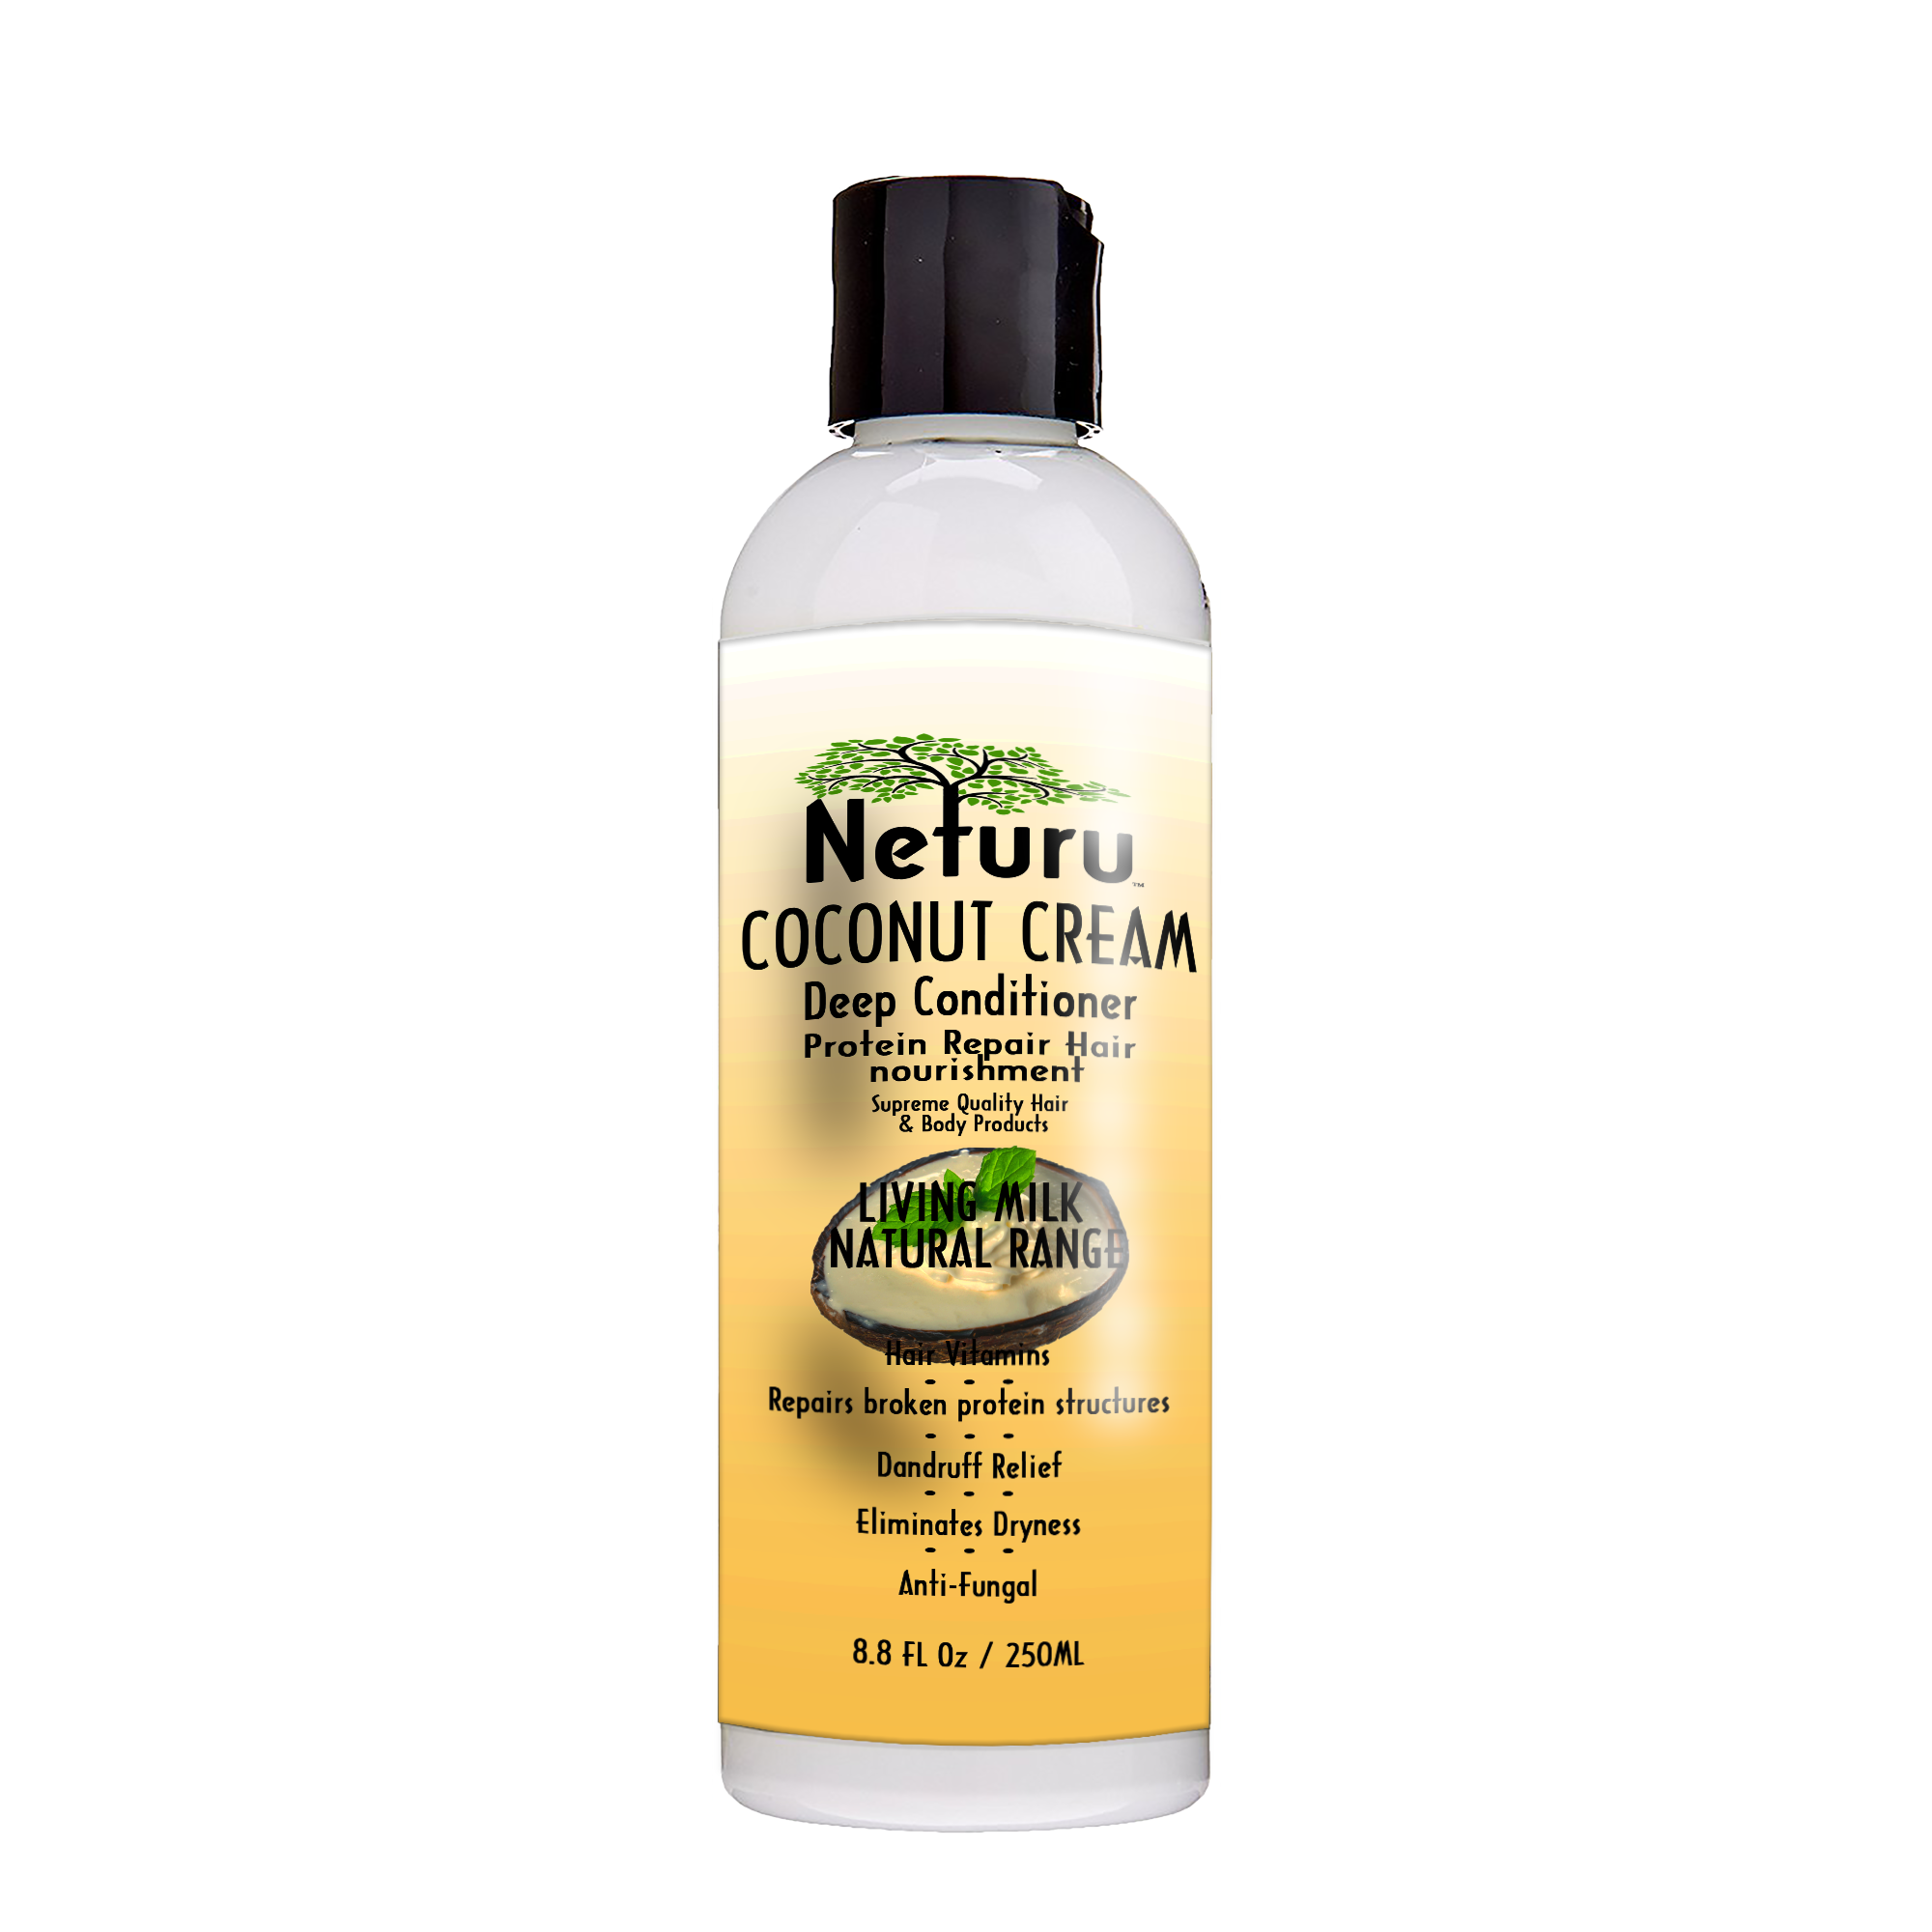 Palmolive Naturals Intensive Moisture Shampoo 350ml